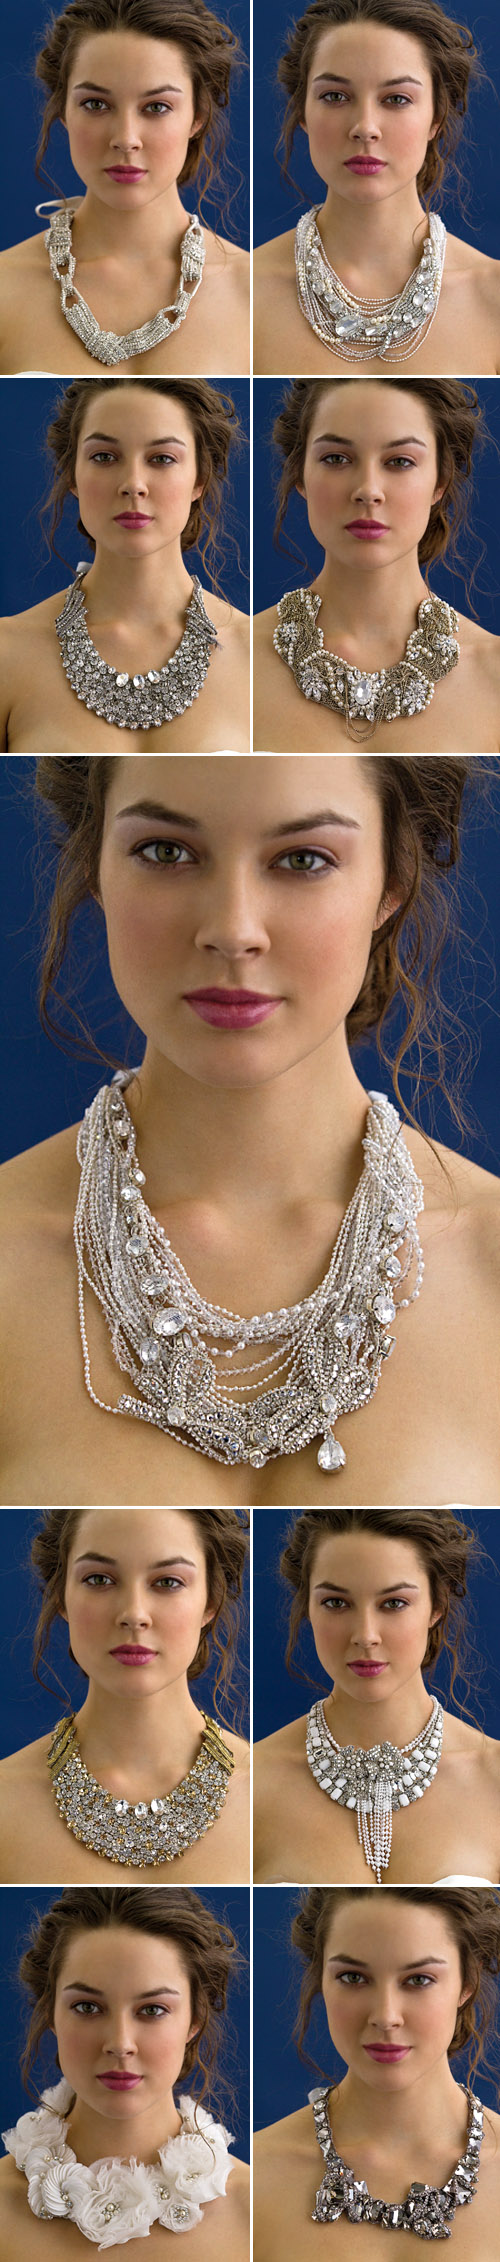 layered multi-strand wedding necklaces and bridal accessories by Rita Vinieris of Rivini